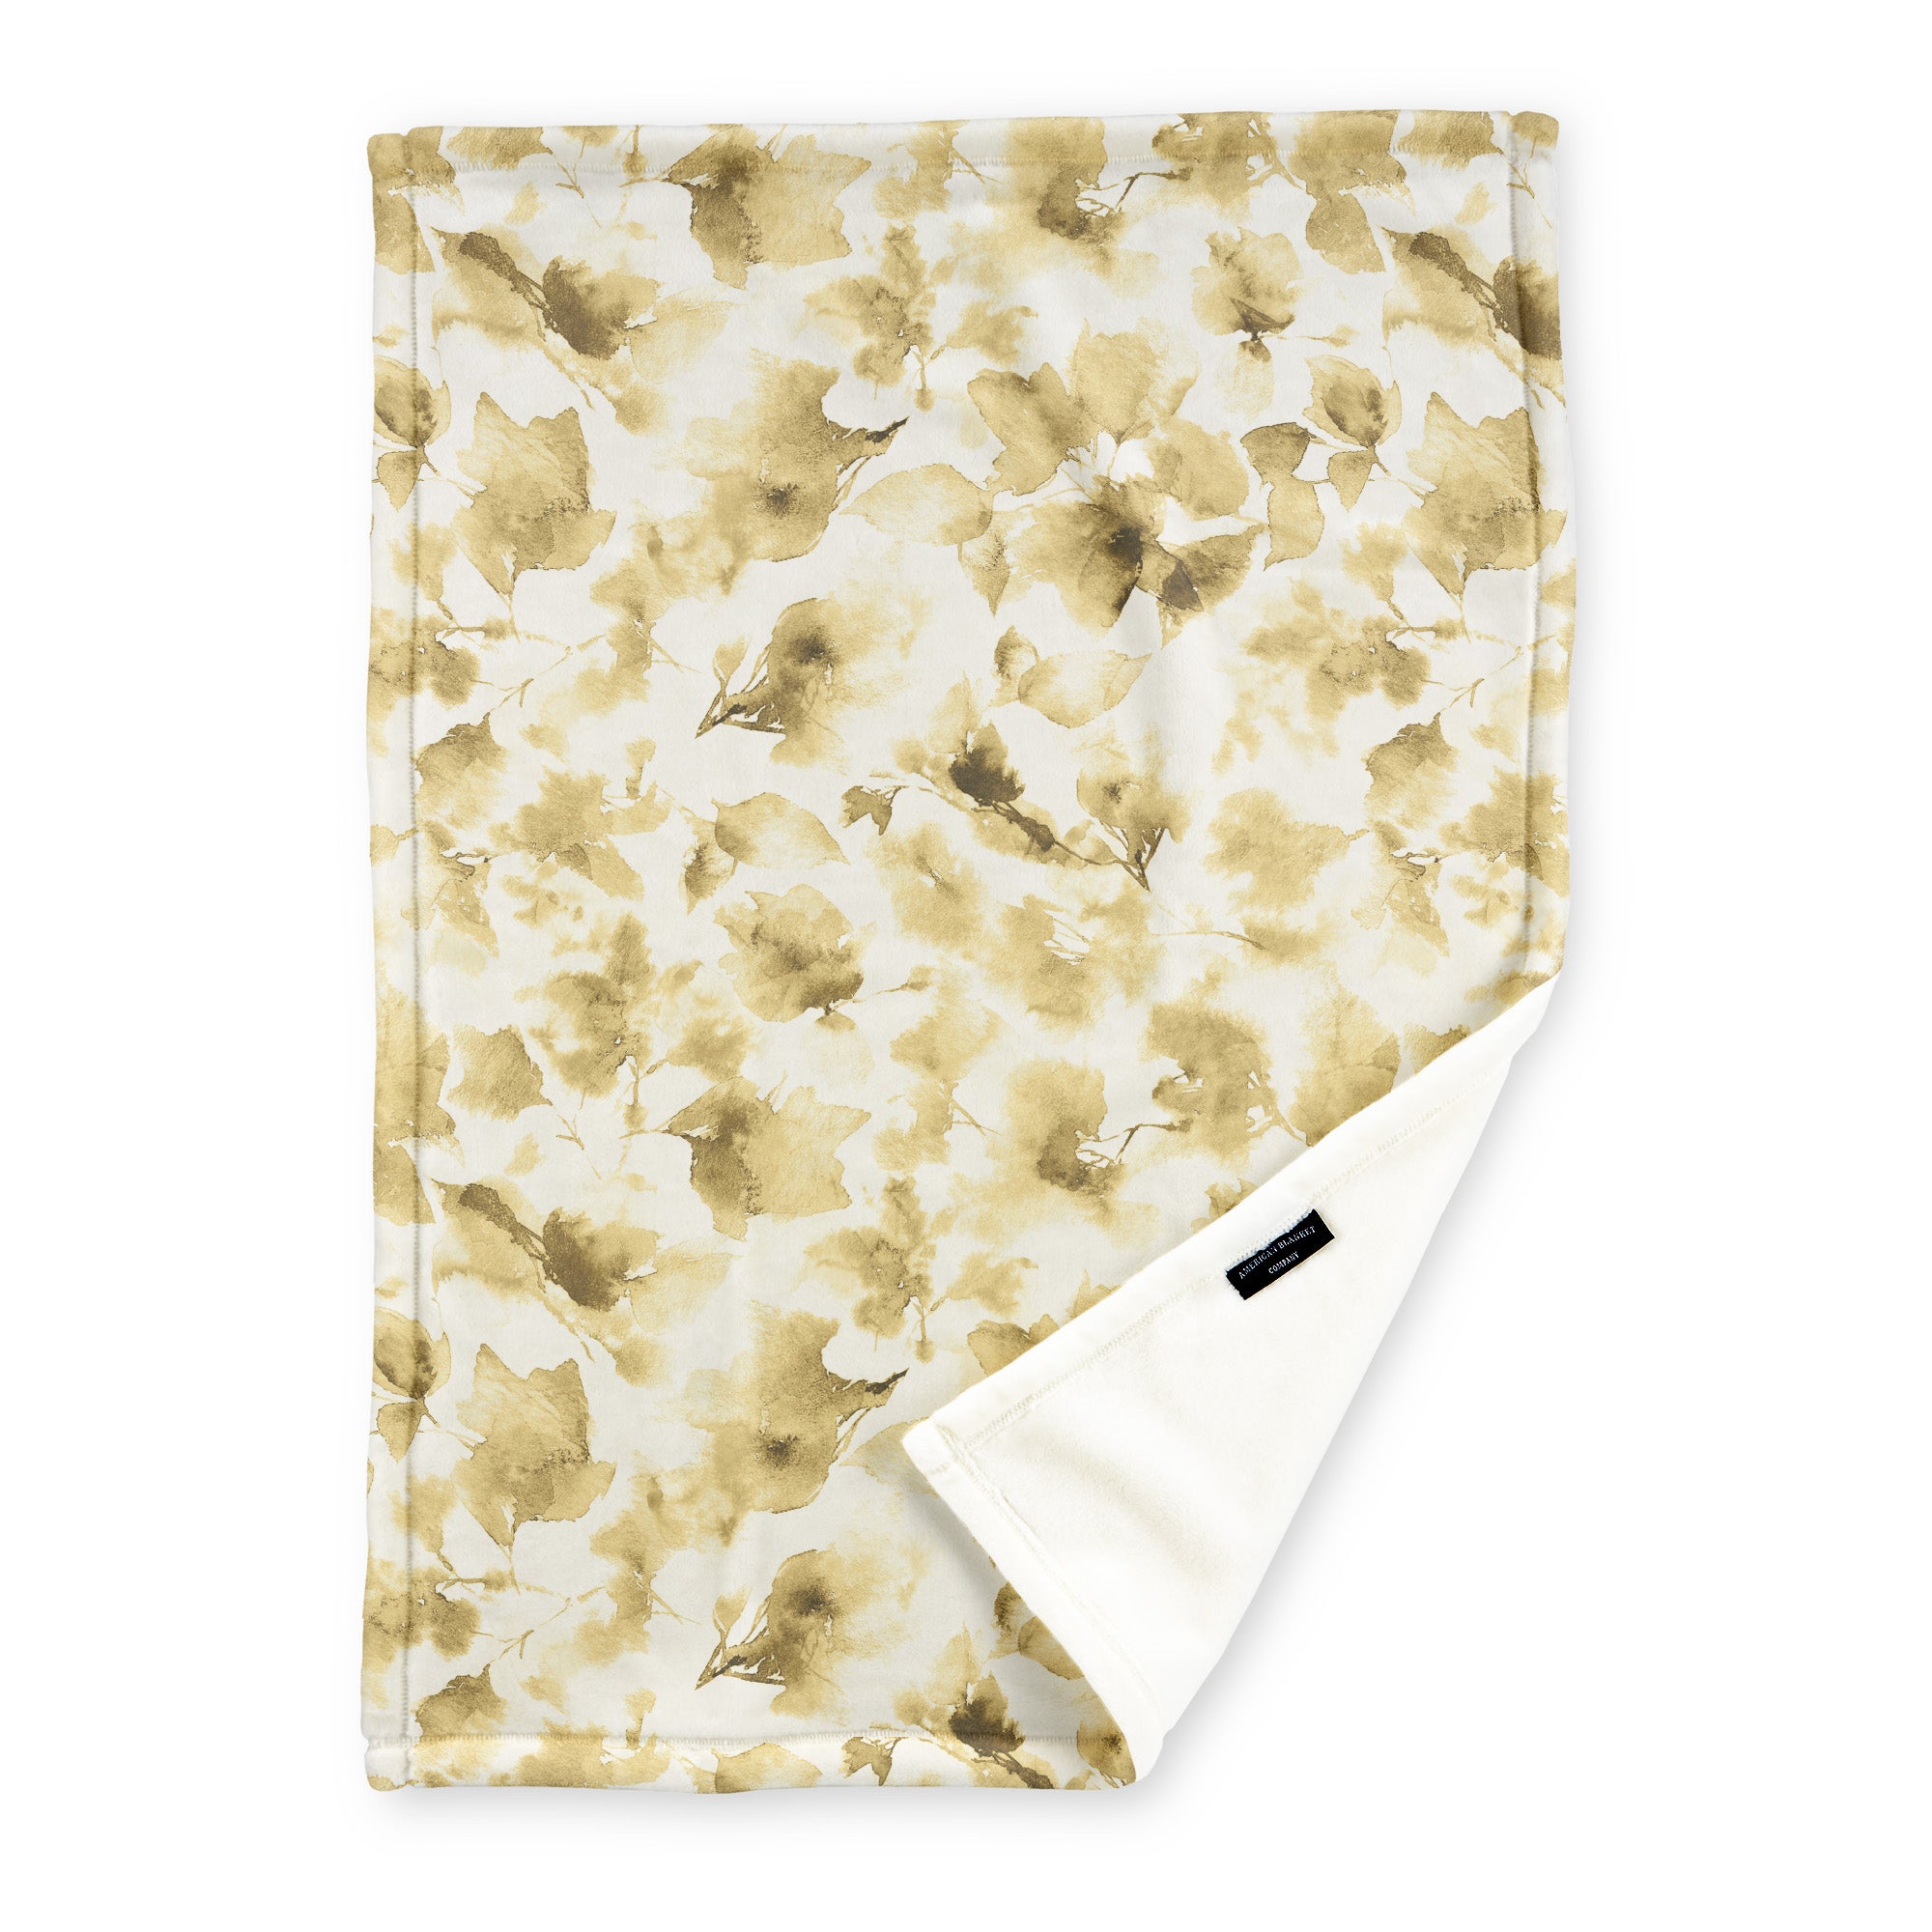 Printed Fleece Throw Blankets  Floral Print Fashion Throws, American  Blanket Company - American Blanket Company